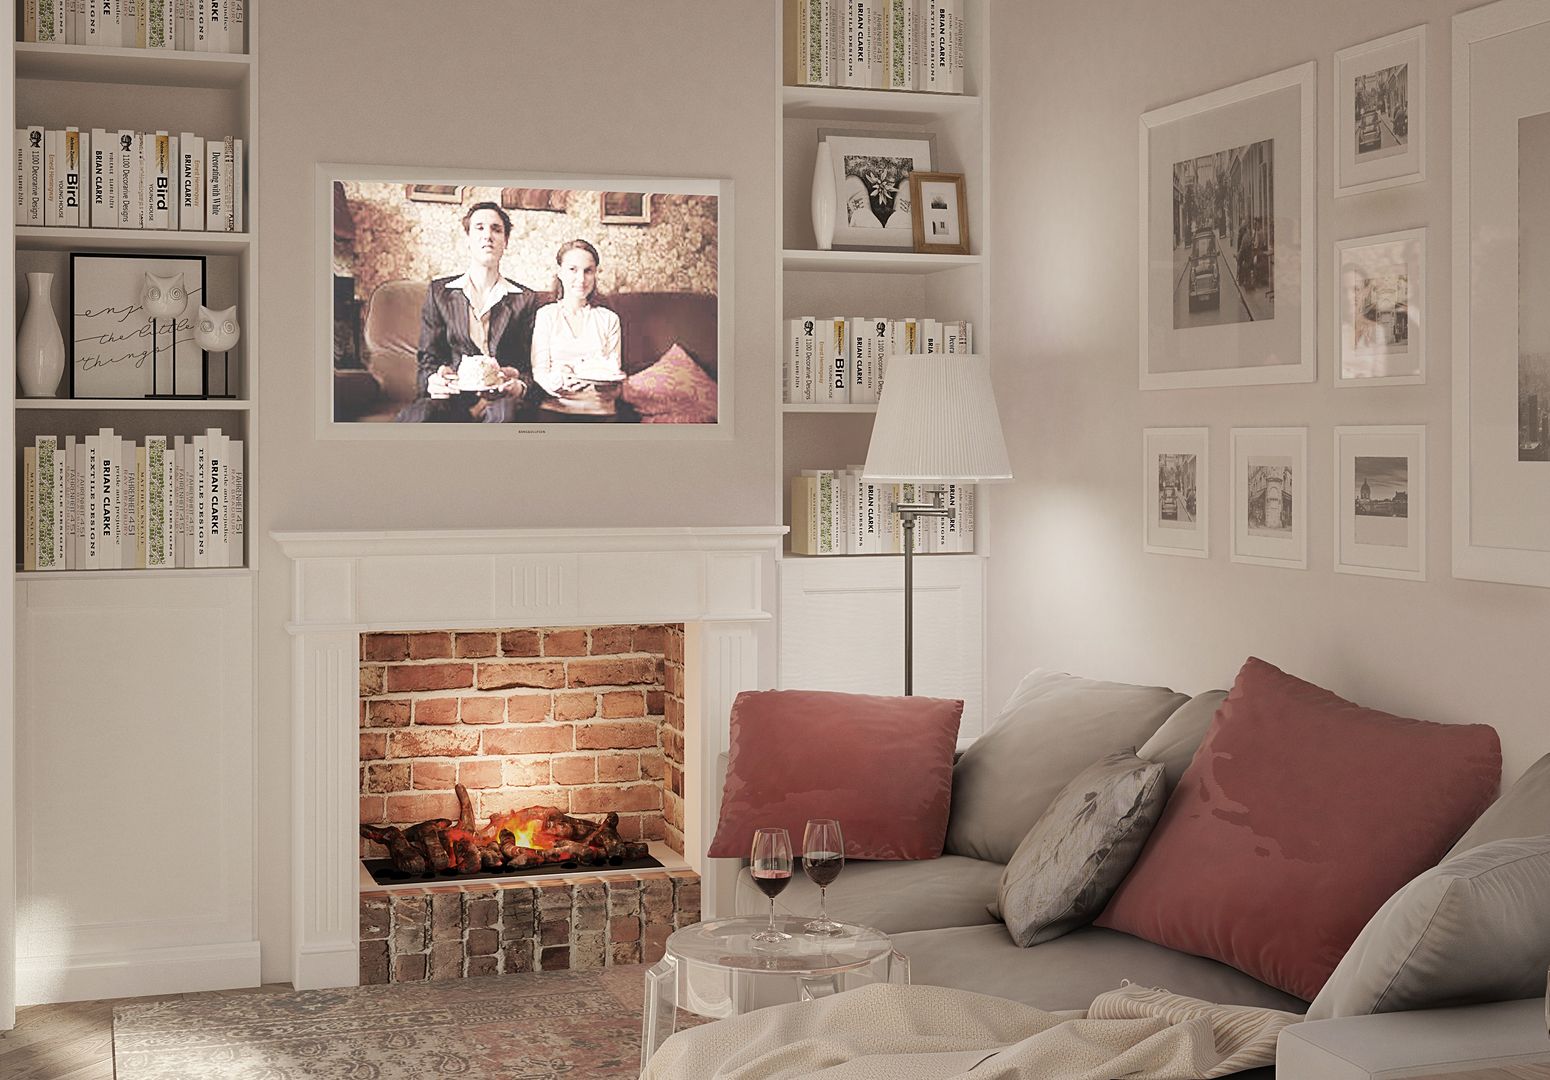 Современный интерьер с традицией, Ольга Бондарь Ольга Бондарь Scandinavian style living room